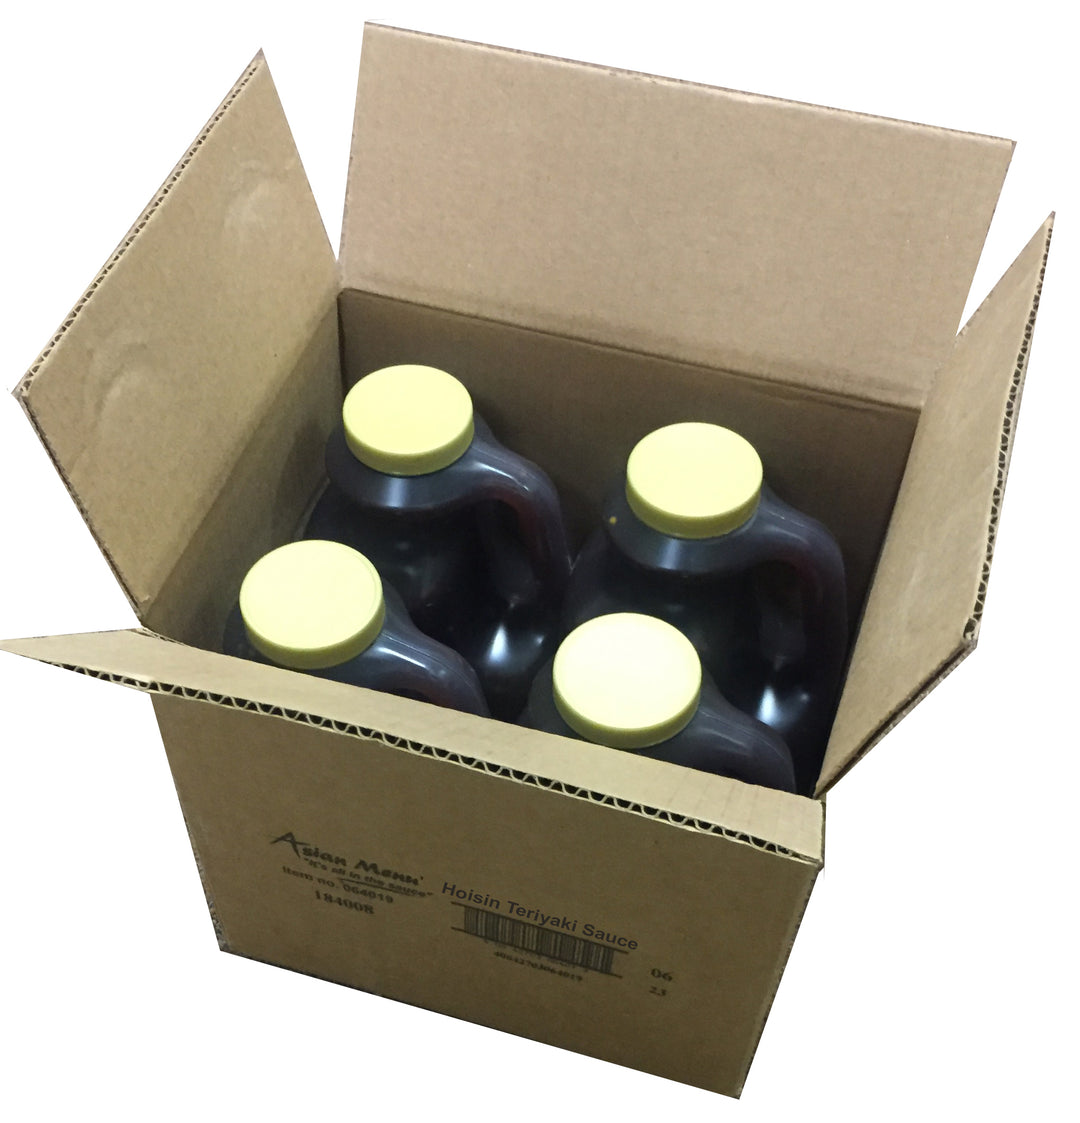 Asian Menu Hoisin Teriyaki Sauce All Natural-0.5 Gallon-1/Box-4/Case